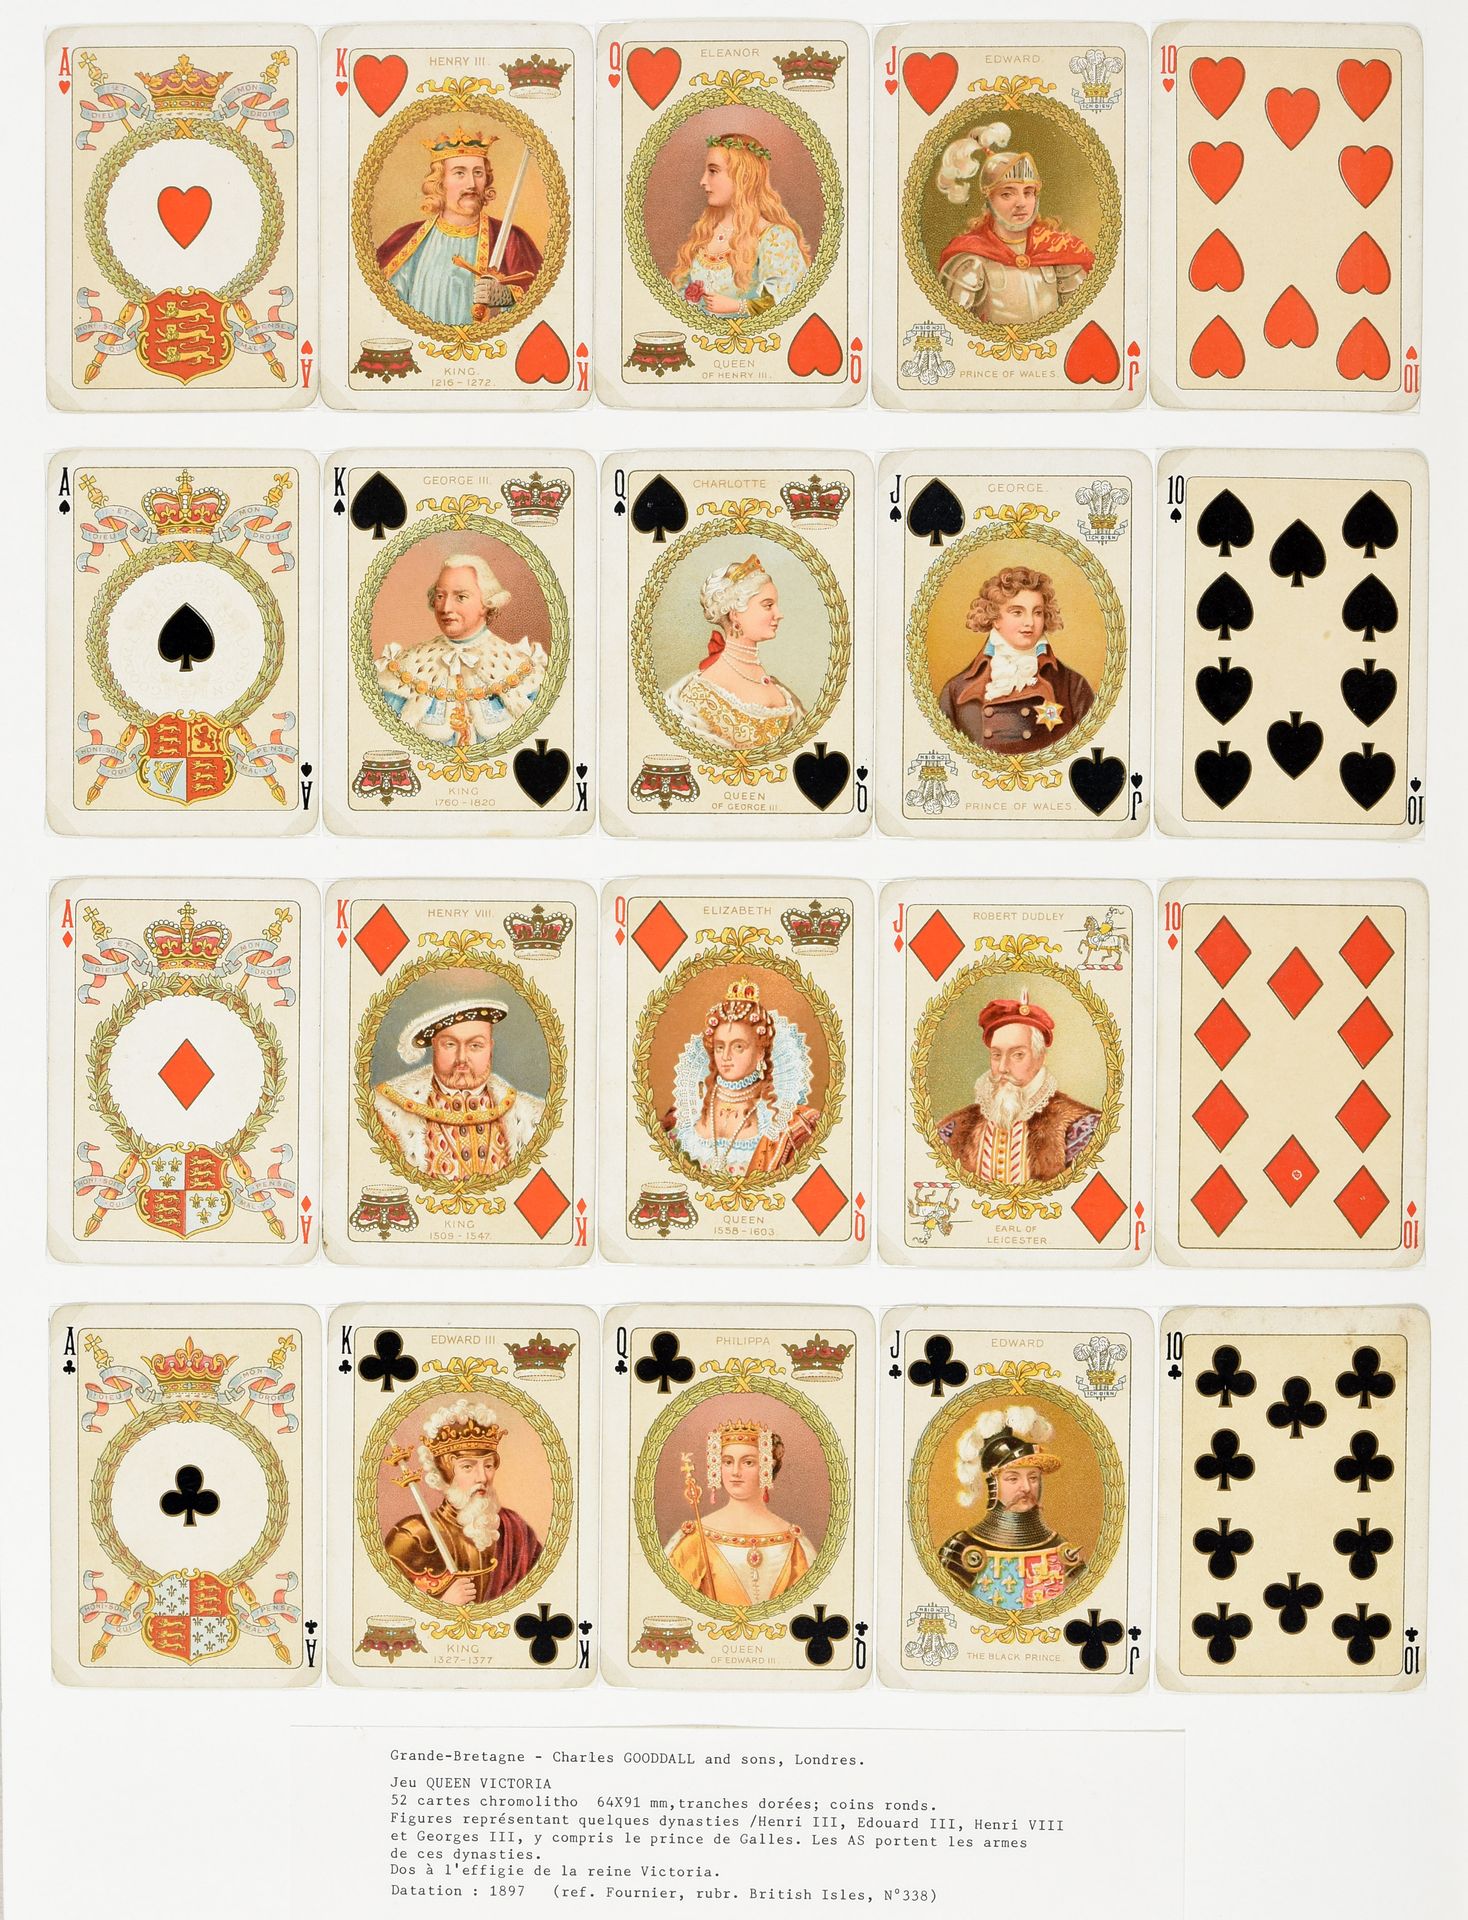 Null "Diamond Jubilee Goodall's "Victorian" playing cards". London Charles Gooda&hellip;